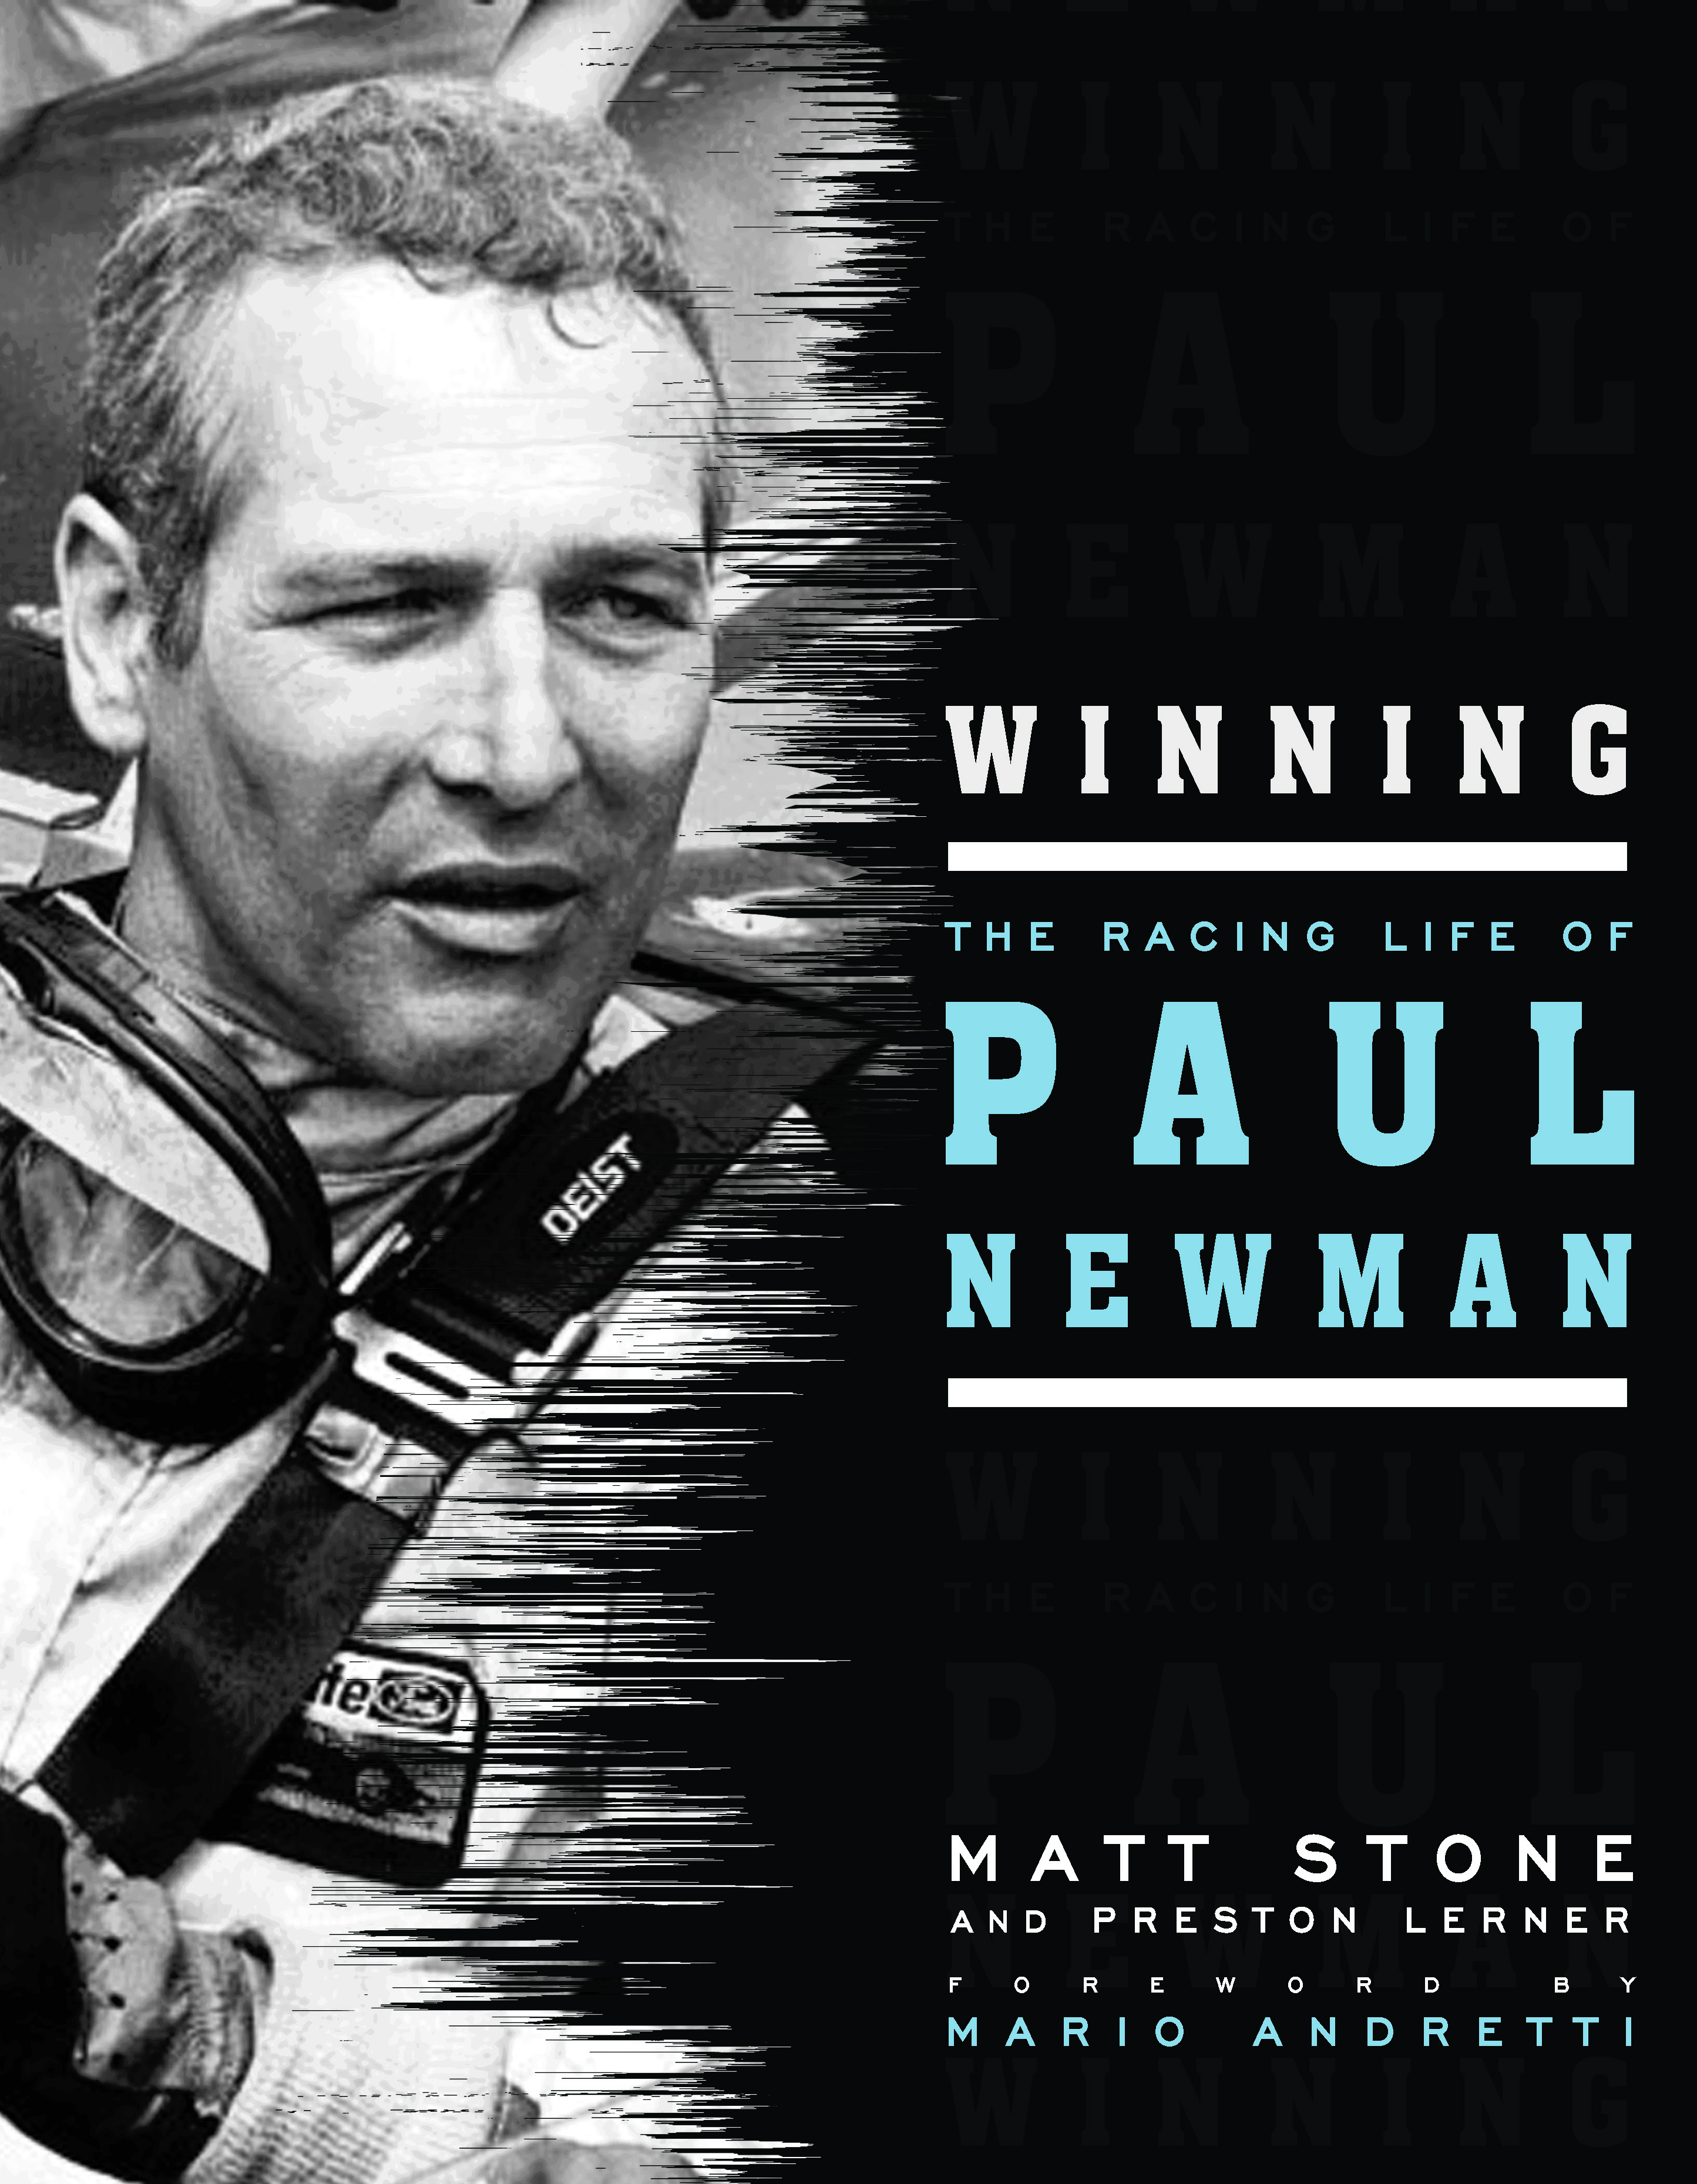 Racing is life. DVD пол Ньюман. Paul Newman Happy Birthday. Race of Life.